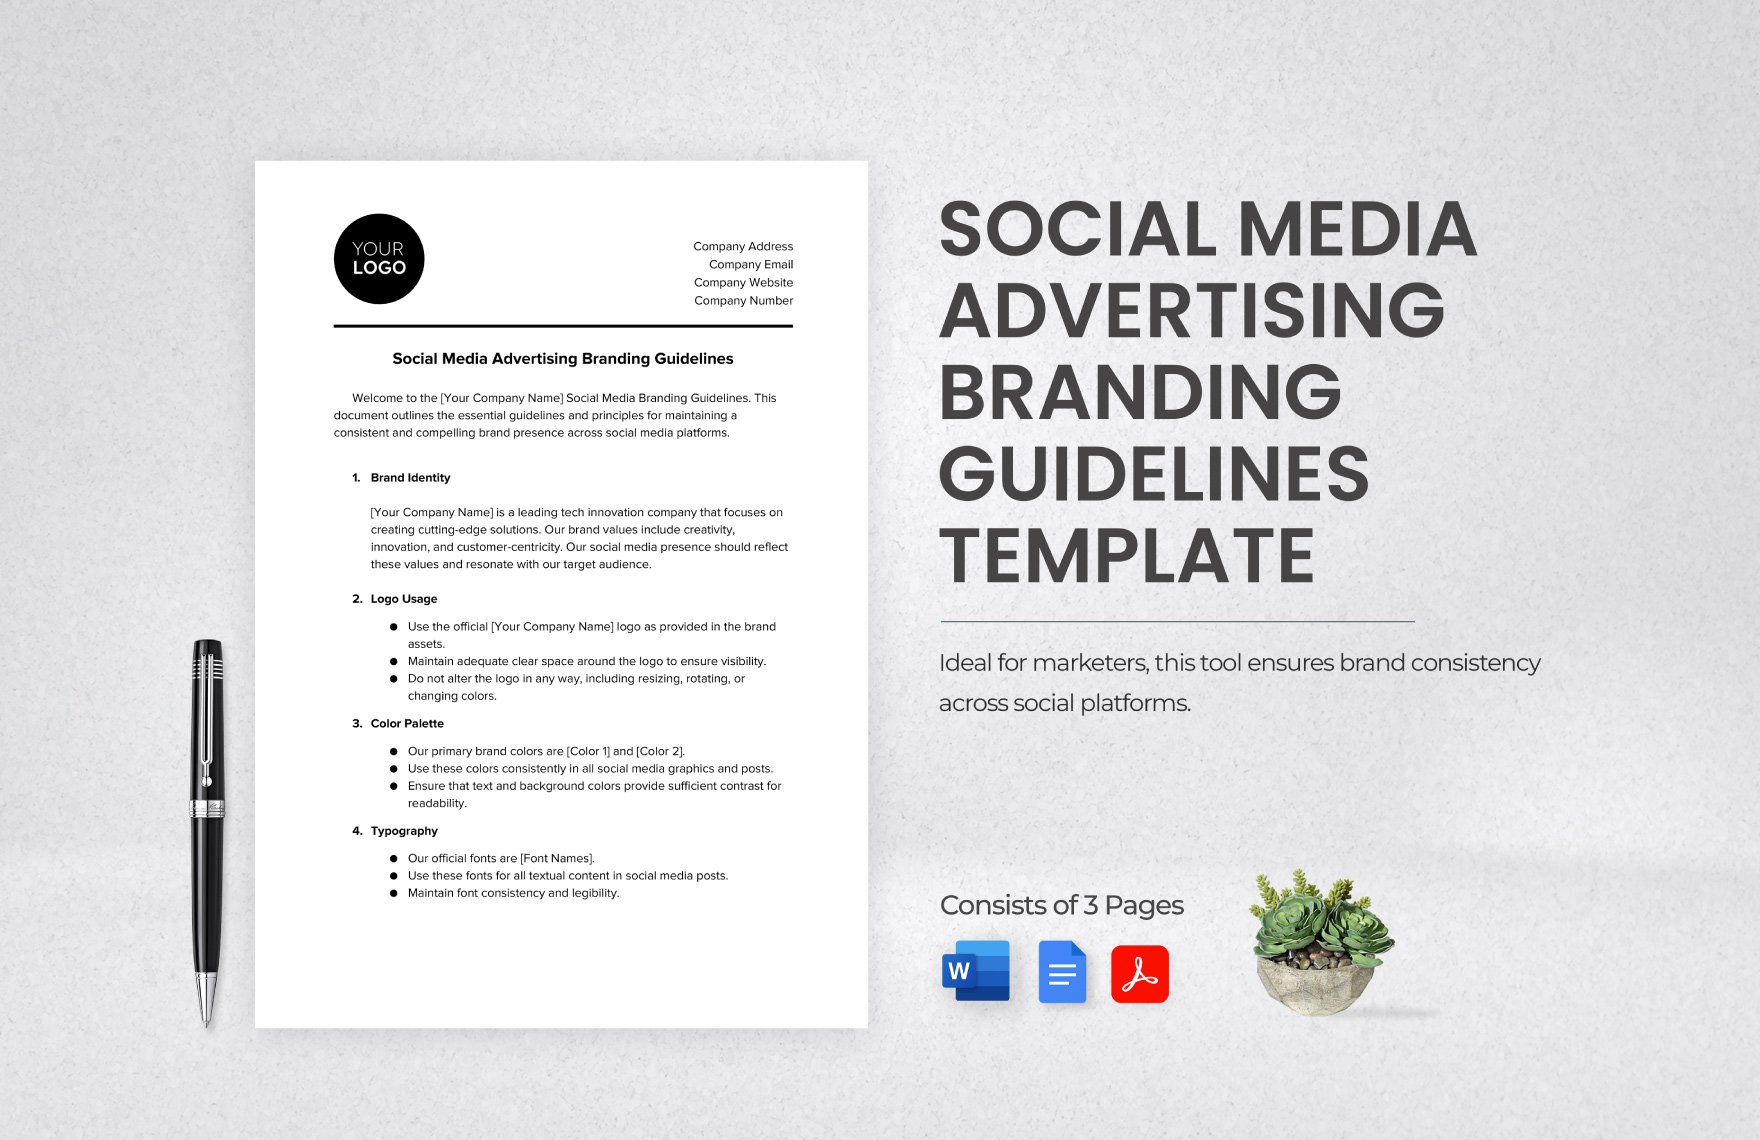 Social Media Advertising Branding Guidelines Template in Word, Google Docs, PDF